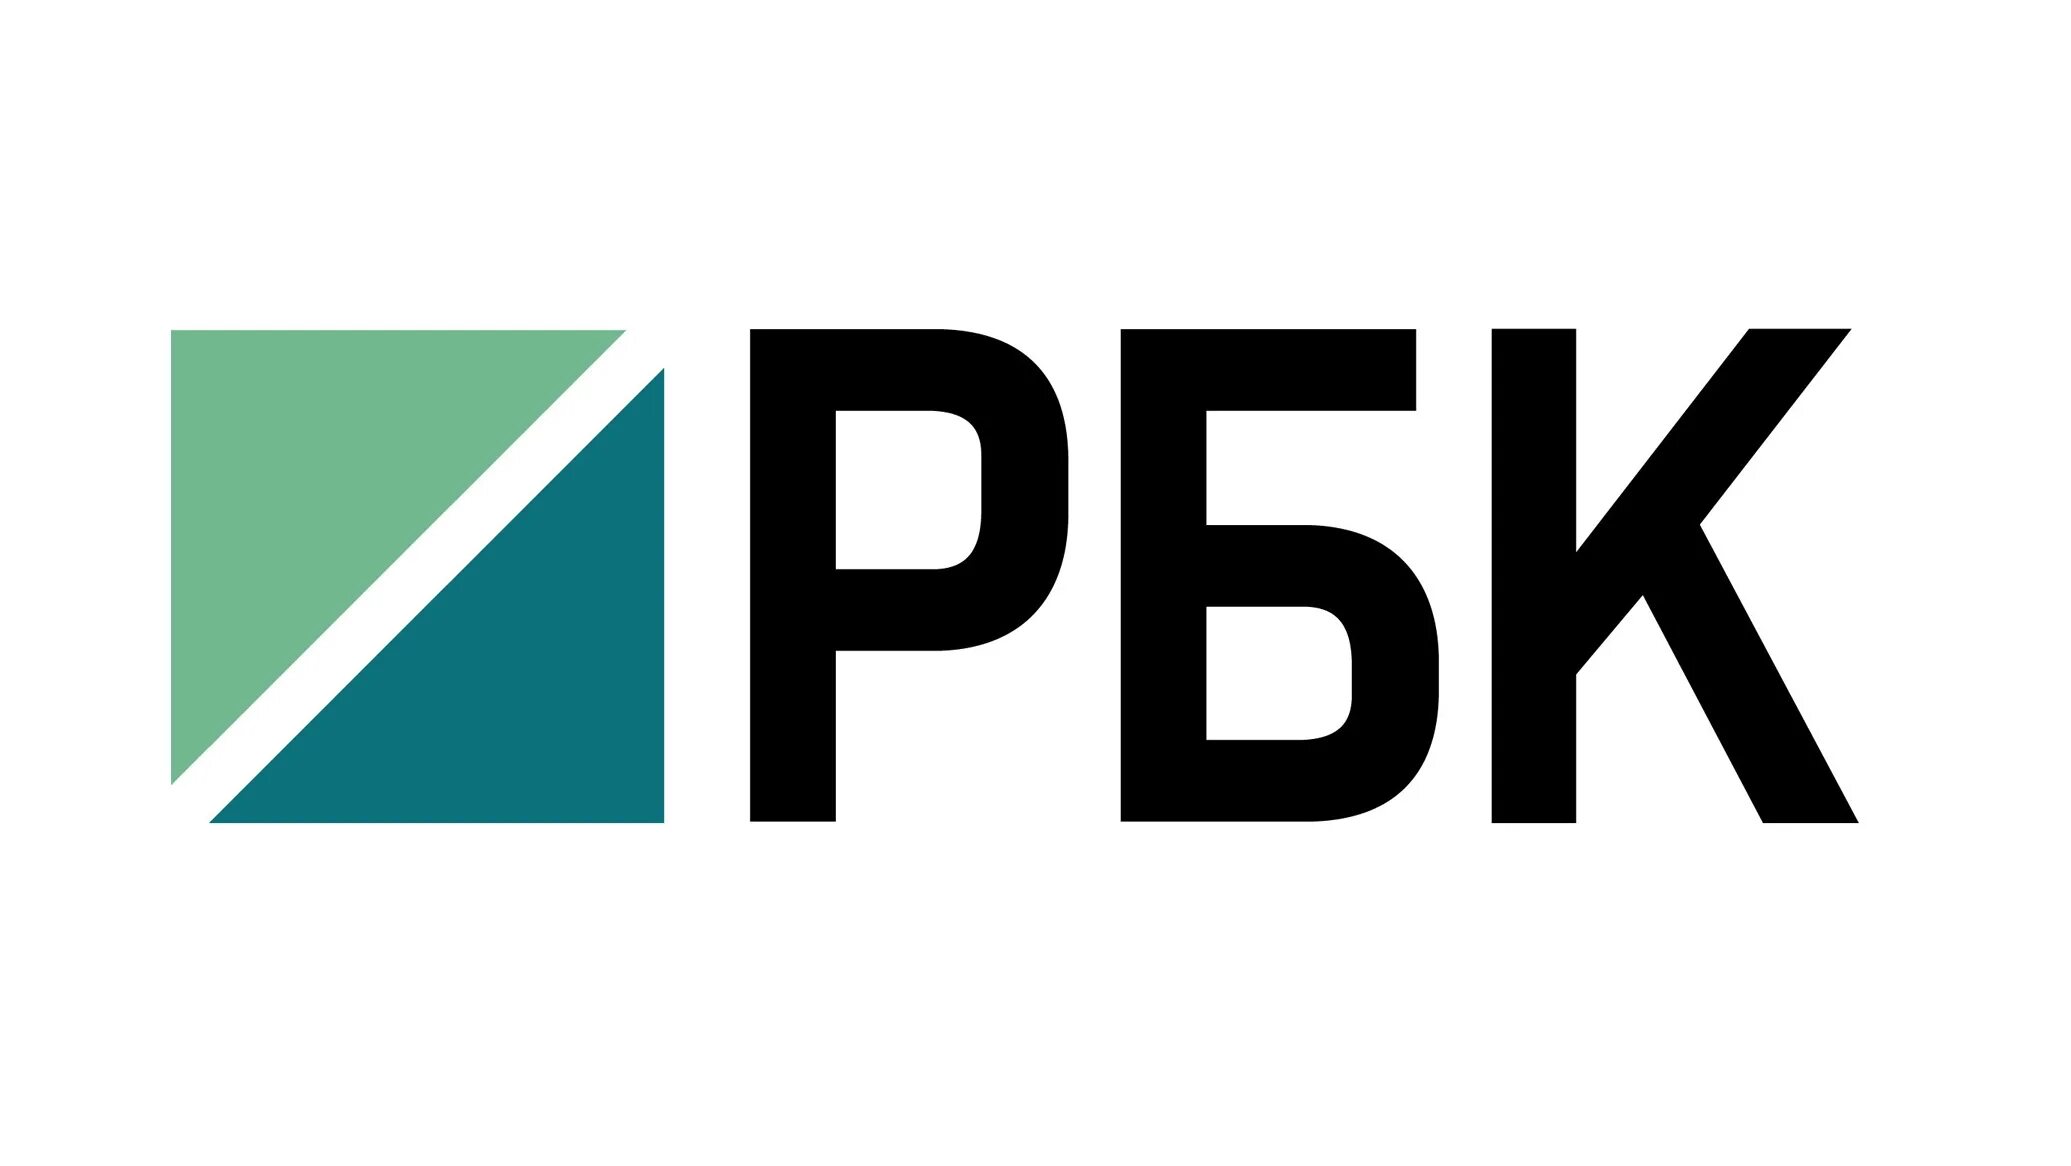 Rbc society. RBC логотип. Телеканал РБК логотип. РБК тренды логотип. РБК Новосибирск.